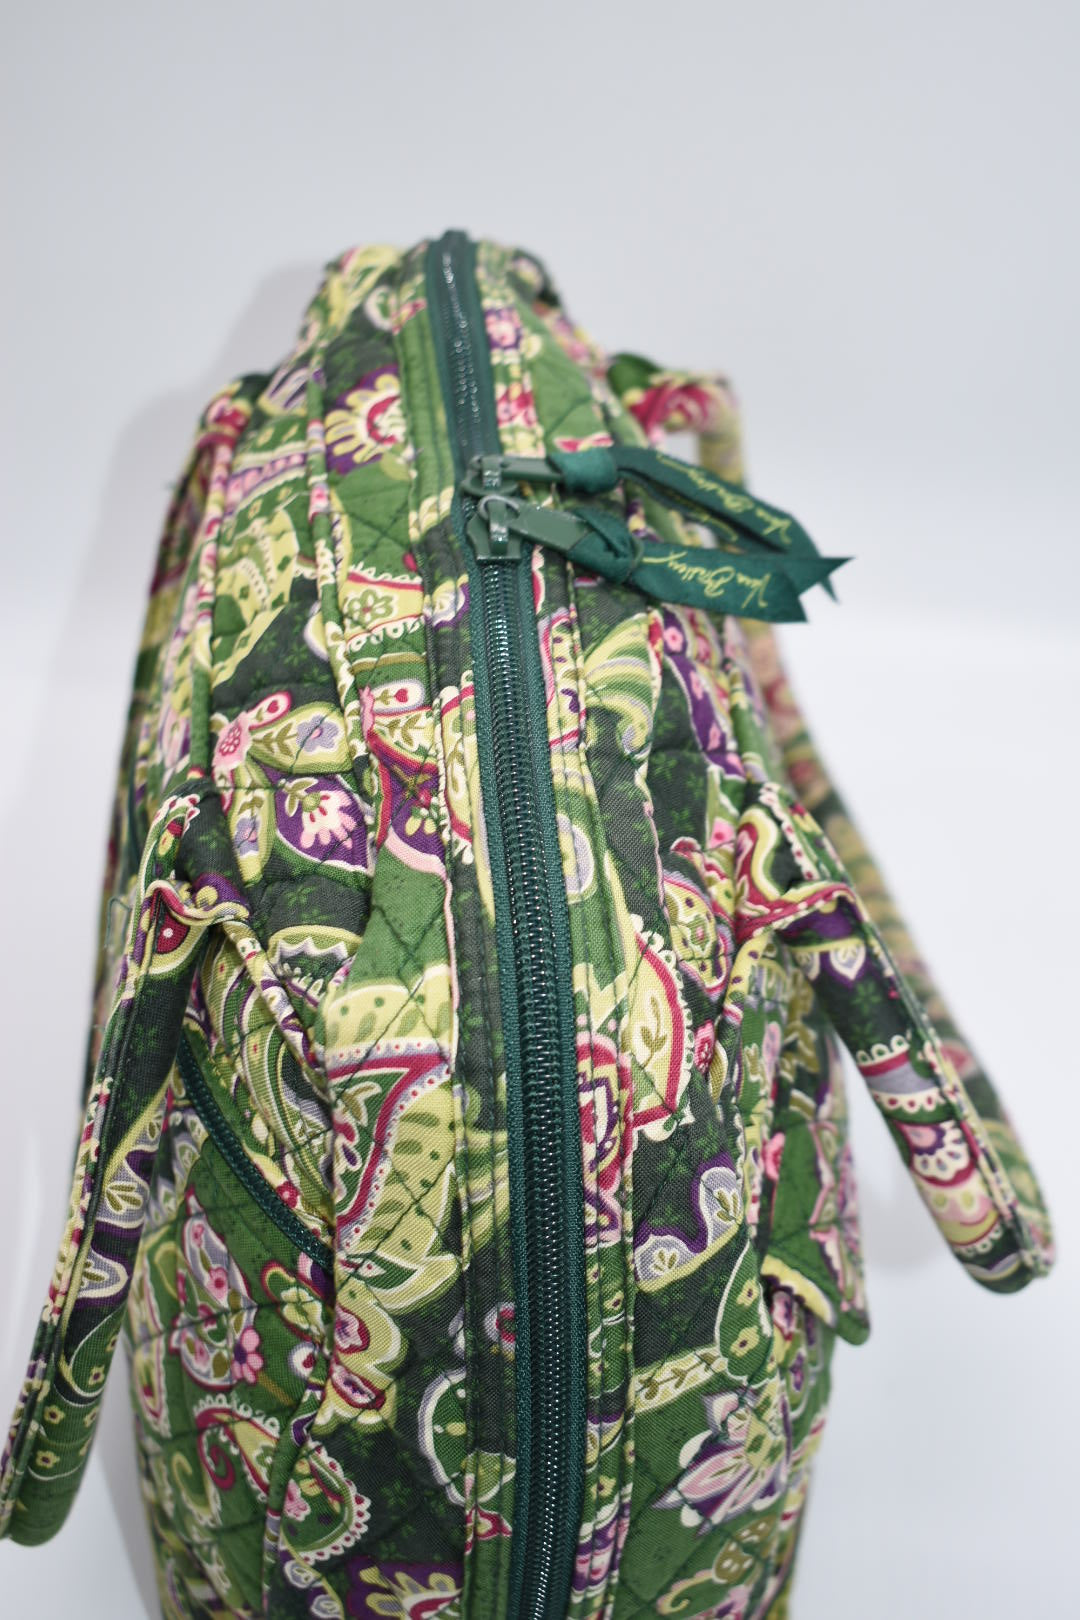 Vera Bradley Bowler Bag in "Chelsea Green" Pattern